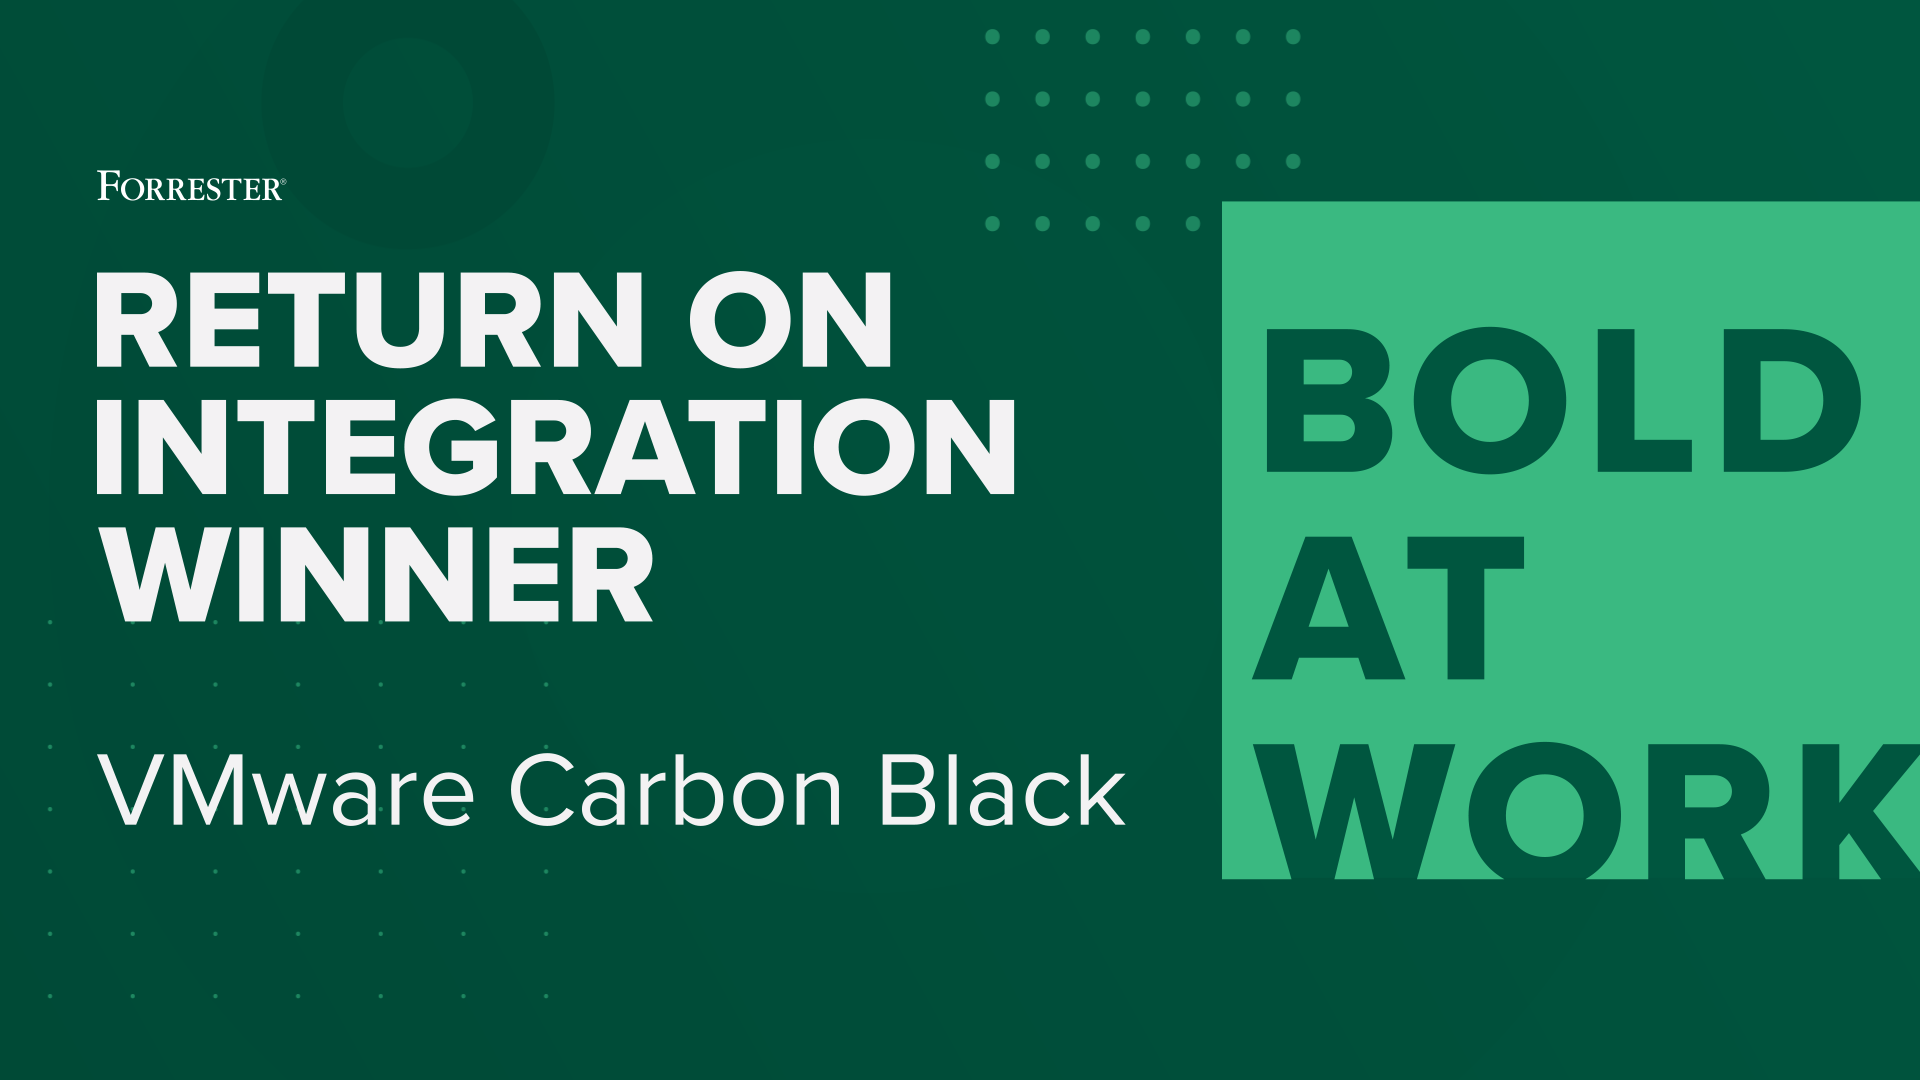 bold-at-work-vmware-carbon-black